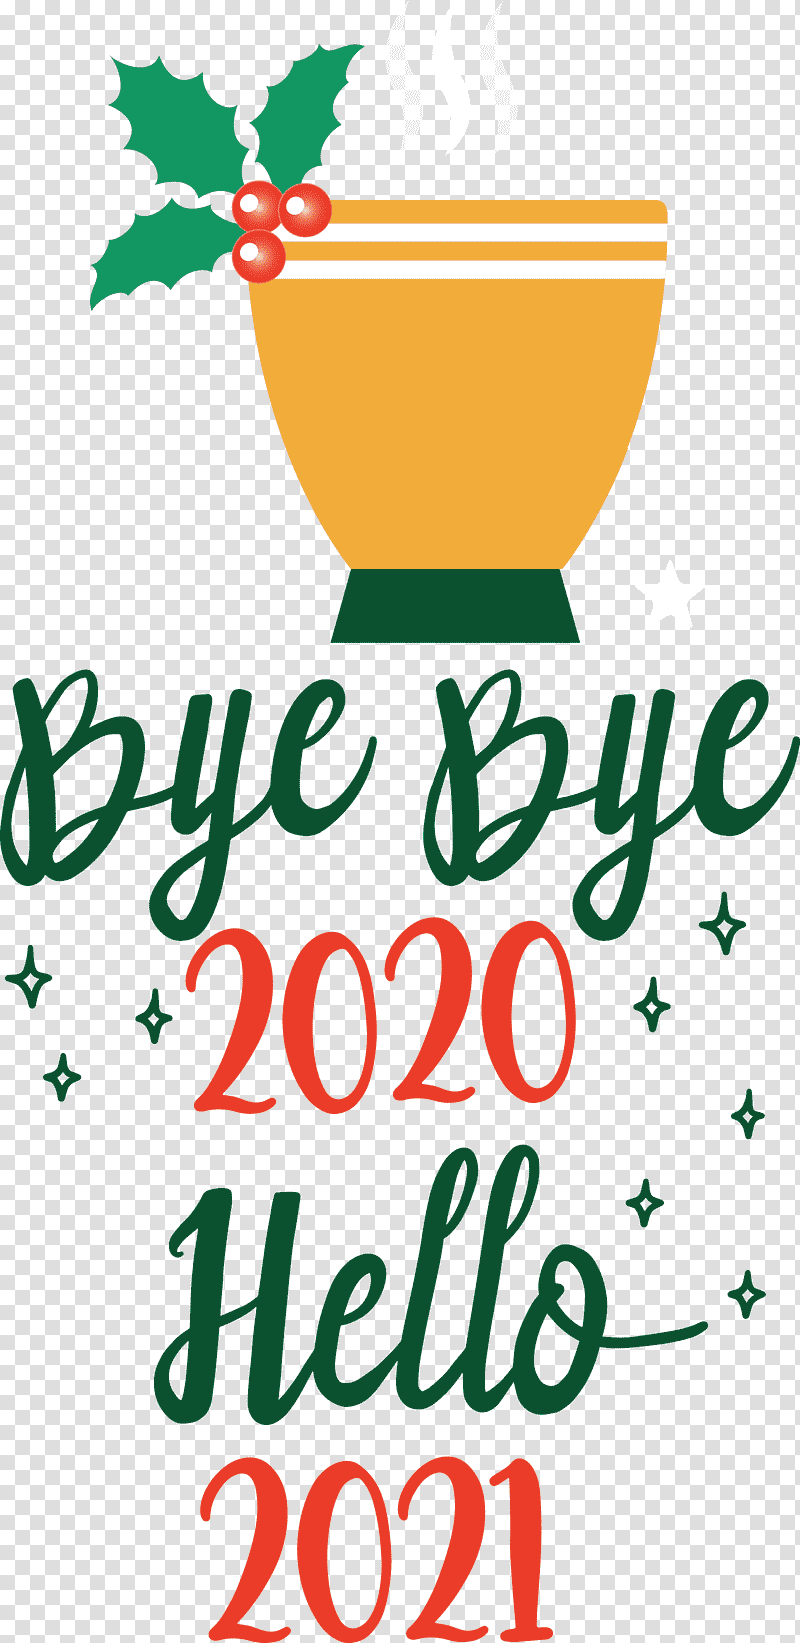 Hello 2021 Year Bye bye 2020 Year, Logo, Tree, Meter, Line, Flower, Mathematics transparent background PNG clipart